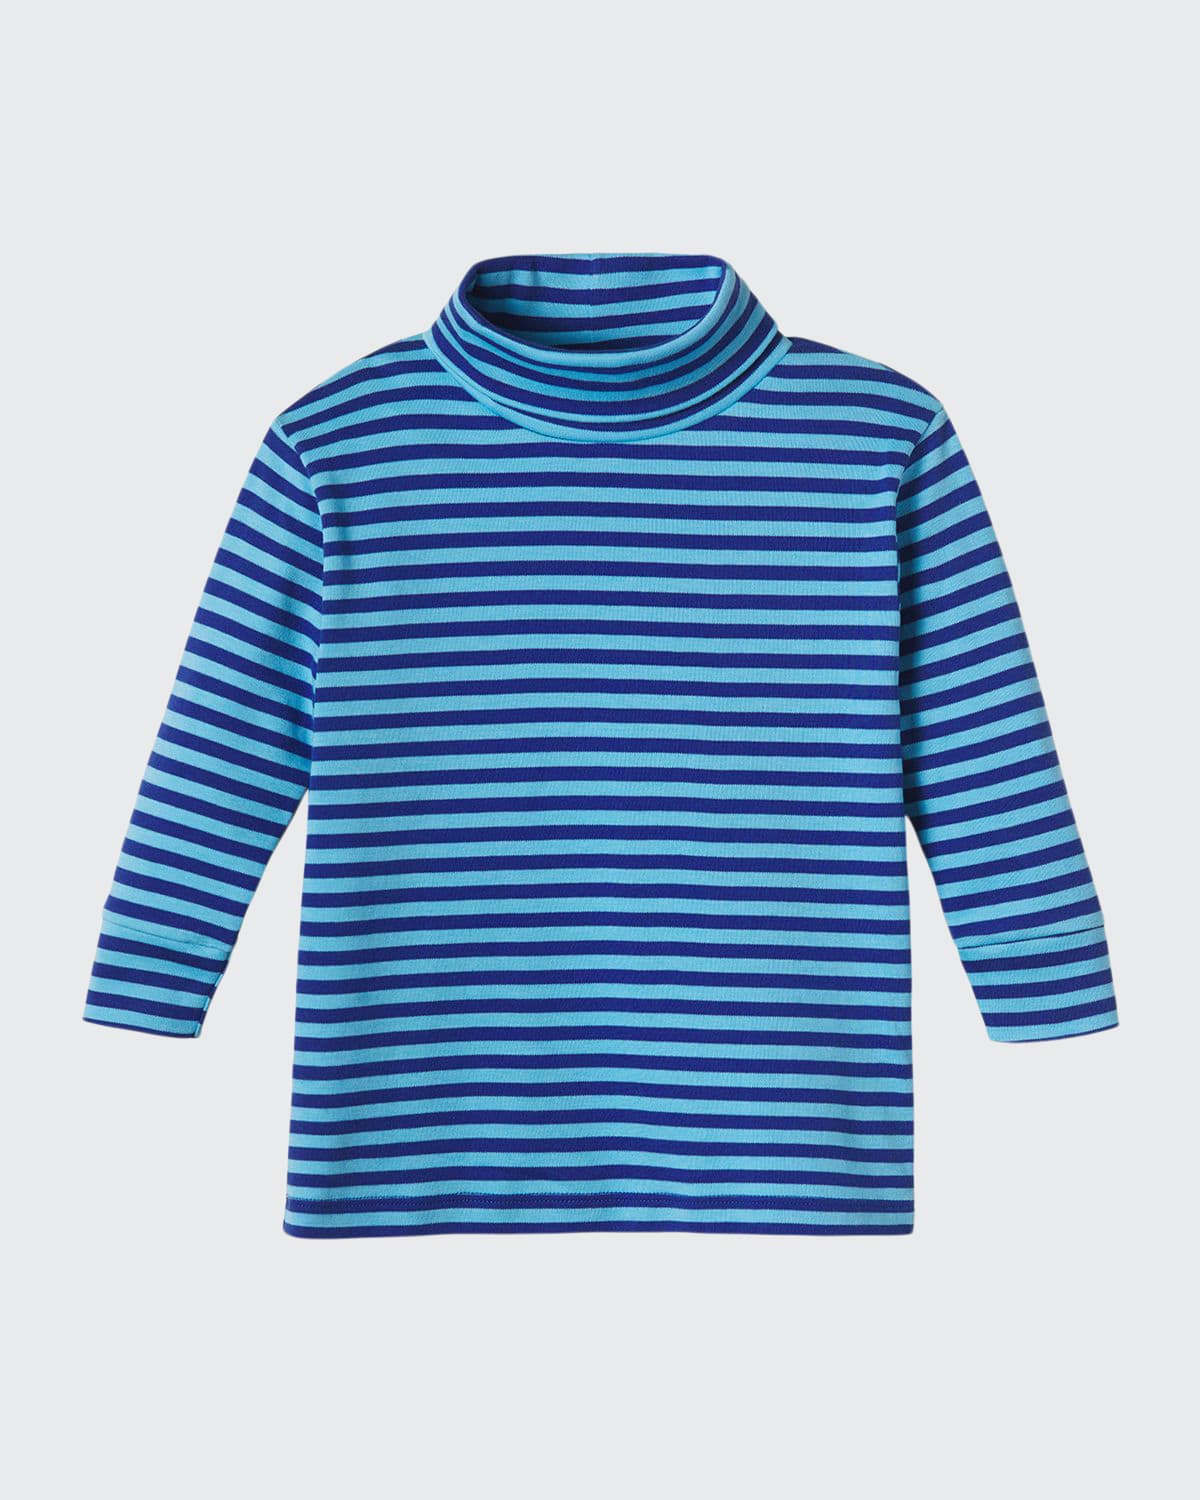 Classic Prep Childrenswear Boy's Patrick Striped Turtleneck Shirt, Size 2-10